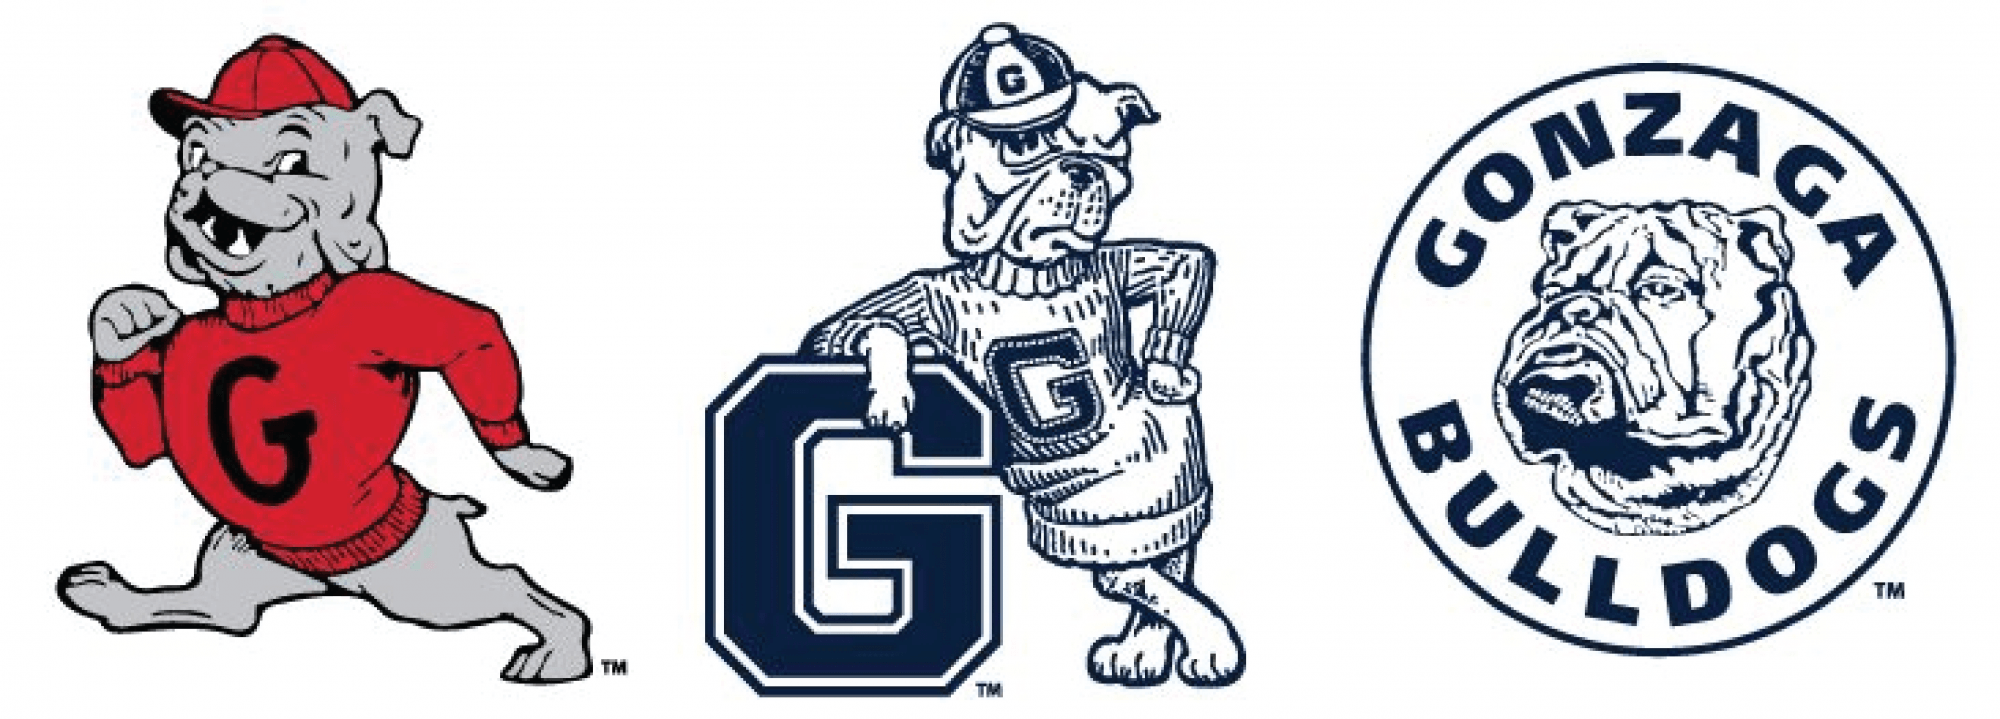 Gonzaga Logo - Which logo do you think Gonzaga used in 1983? Logos